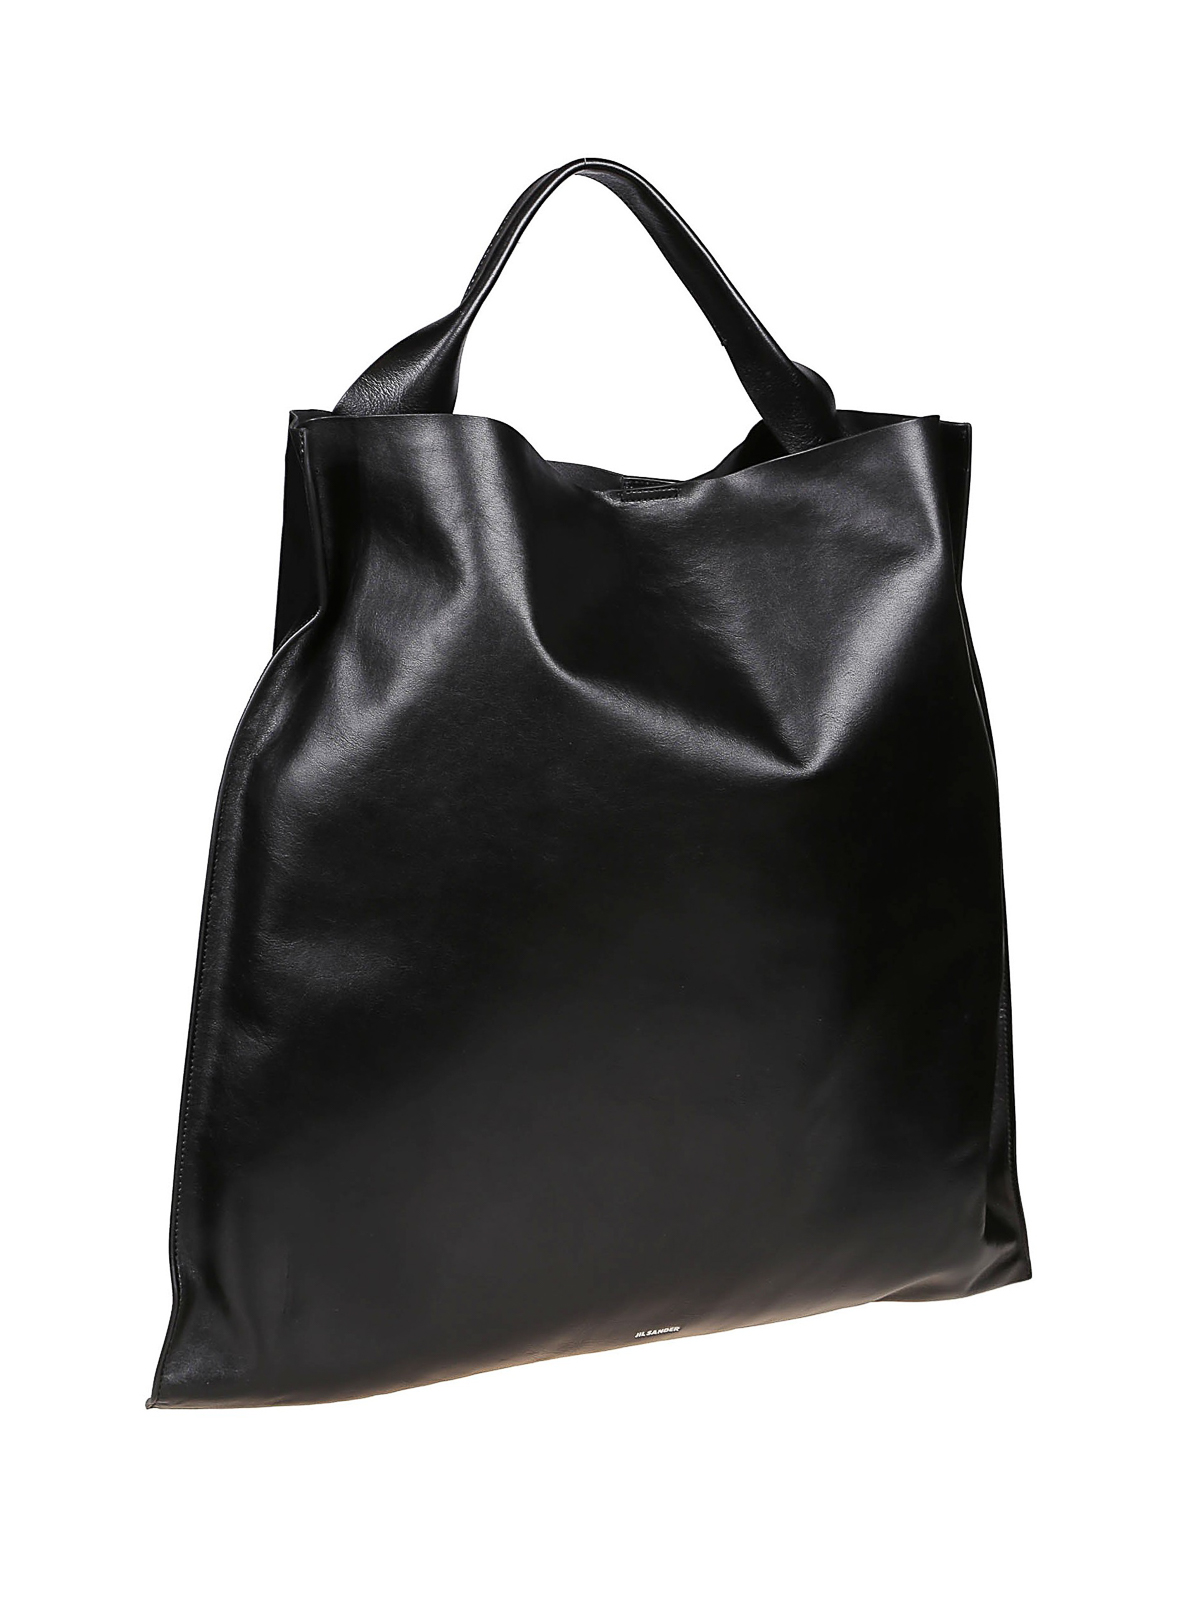 Portiek Gebakjes diefstal Totes bags Jil Sander - Xiao black medium shopping bag -  JSPO850041WOB00055001